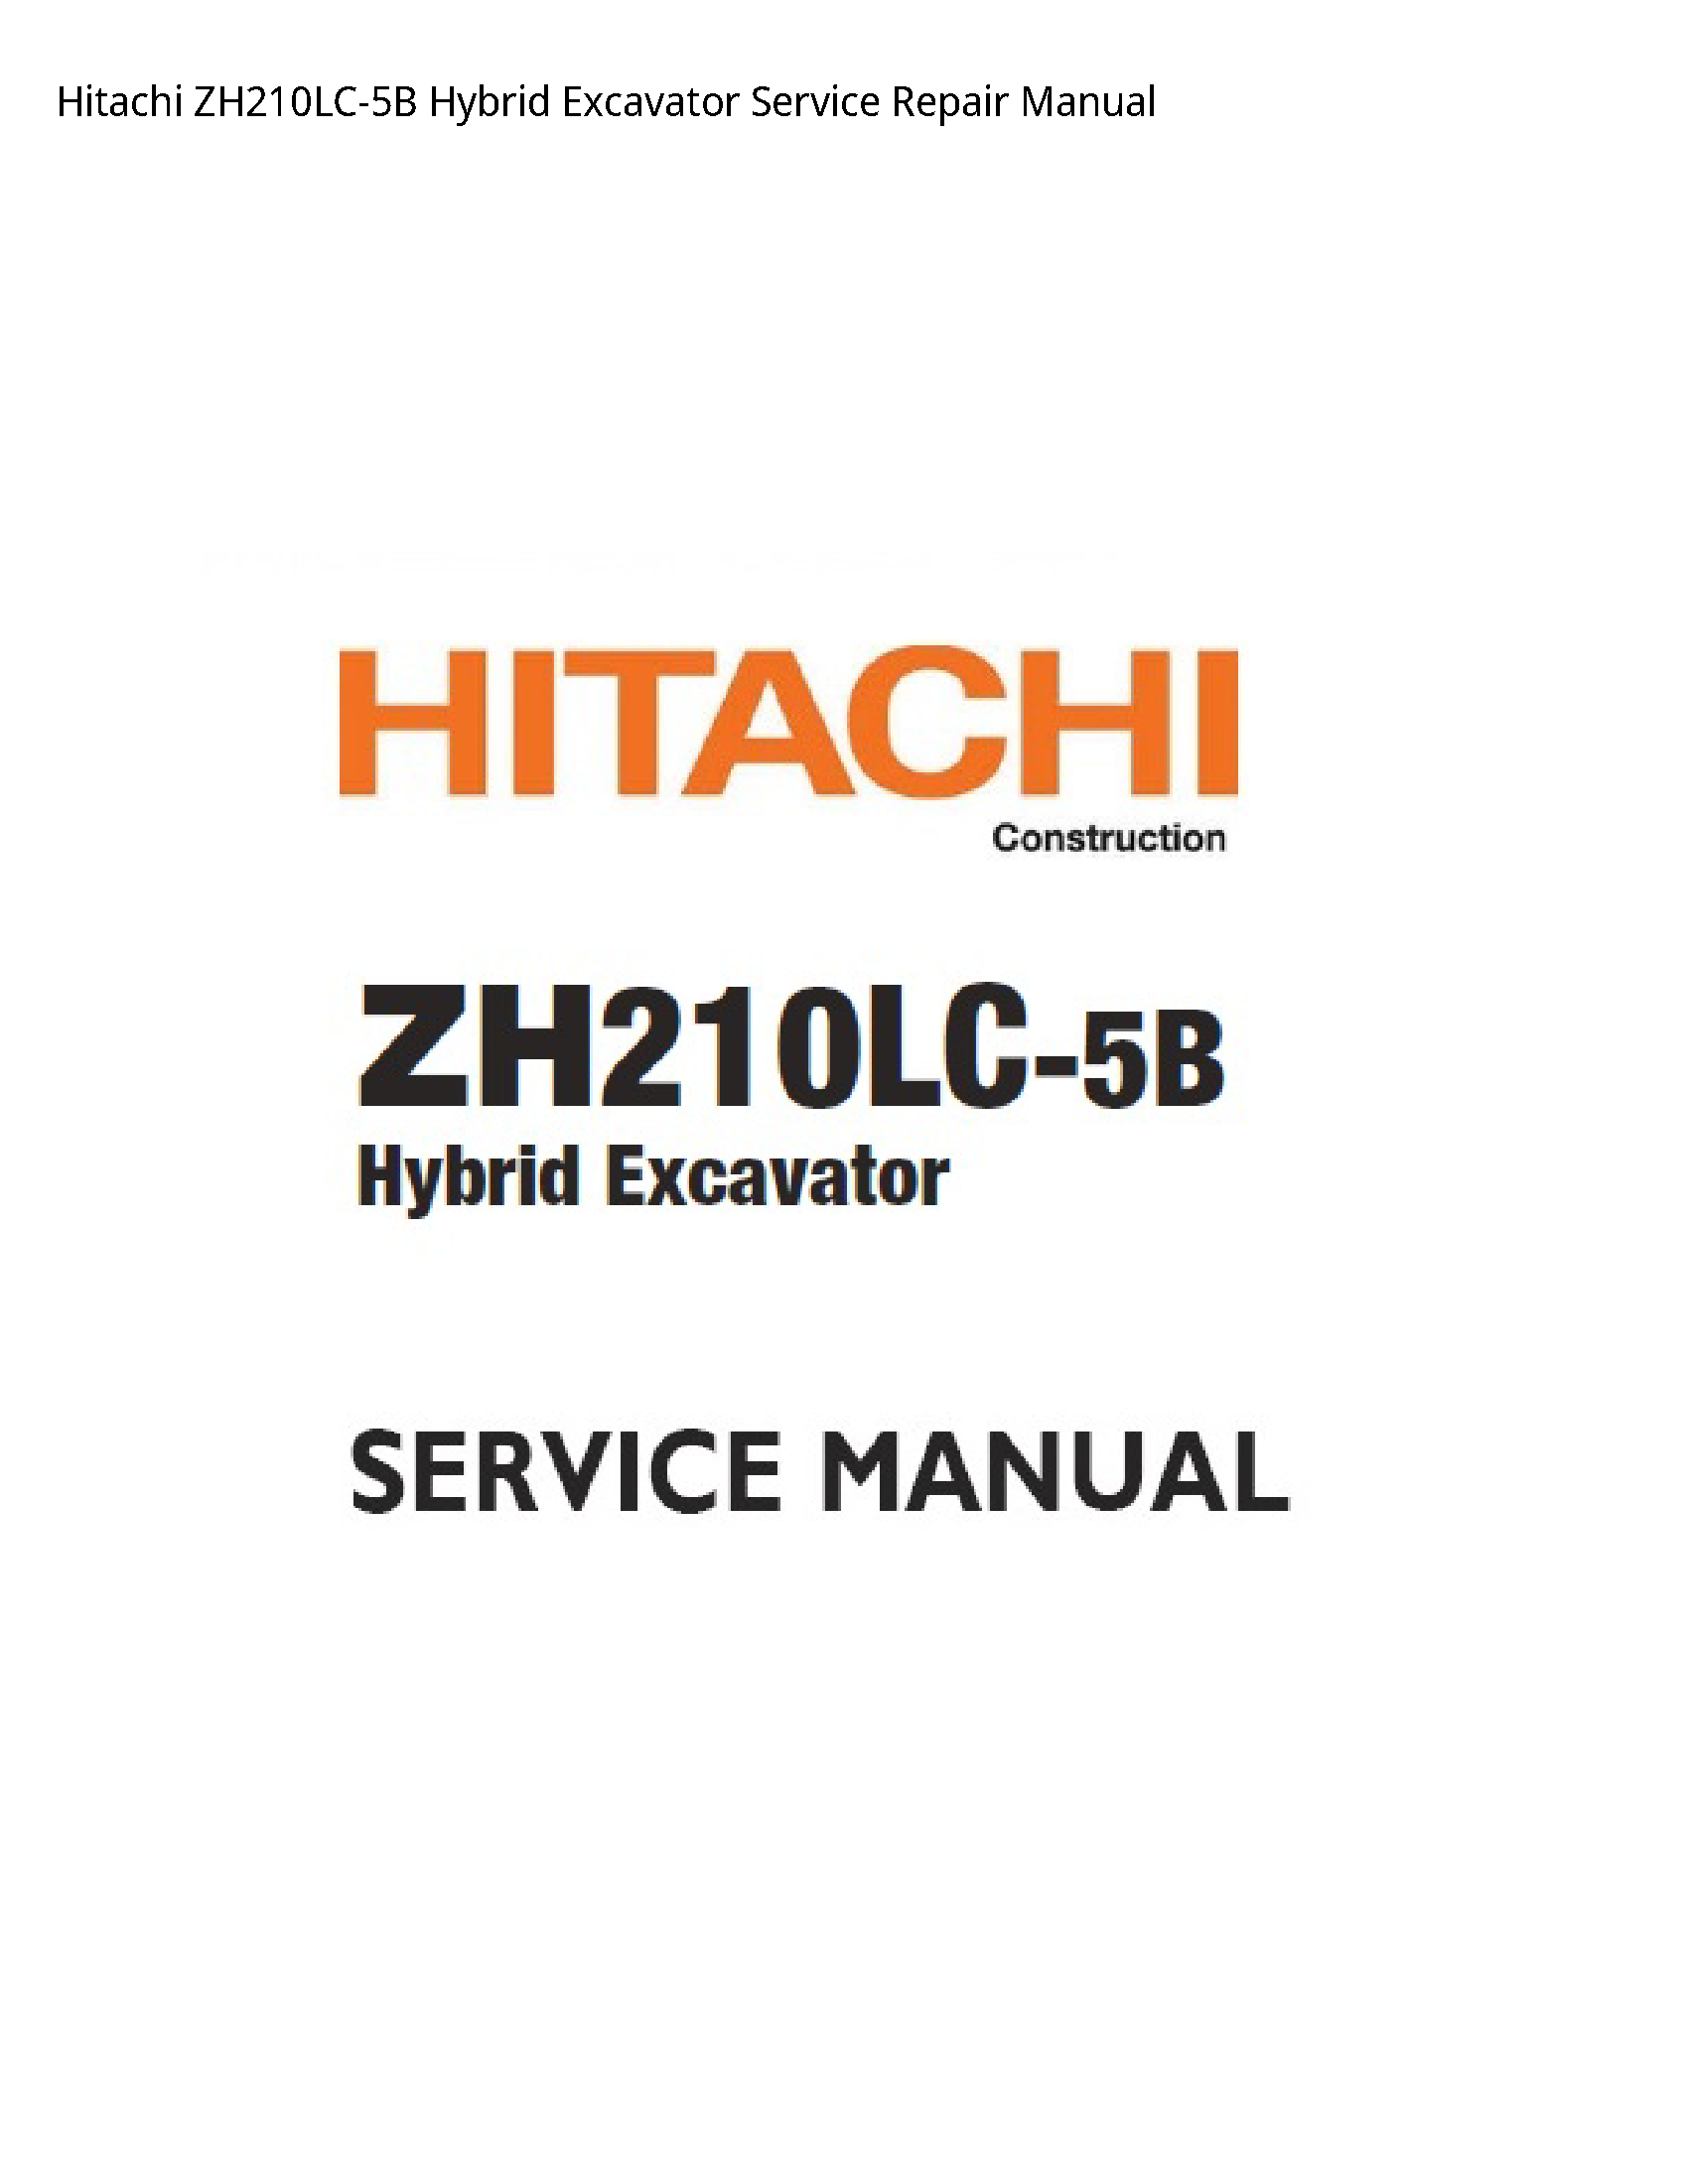 Hitachi ZH210LC-5B Hybrid Excavator manual